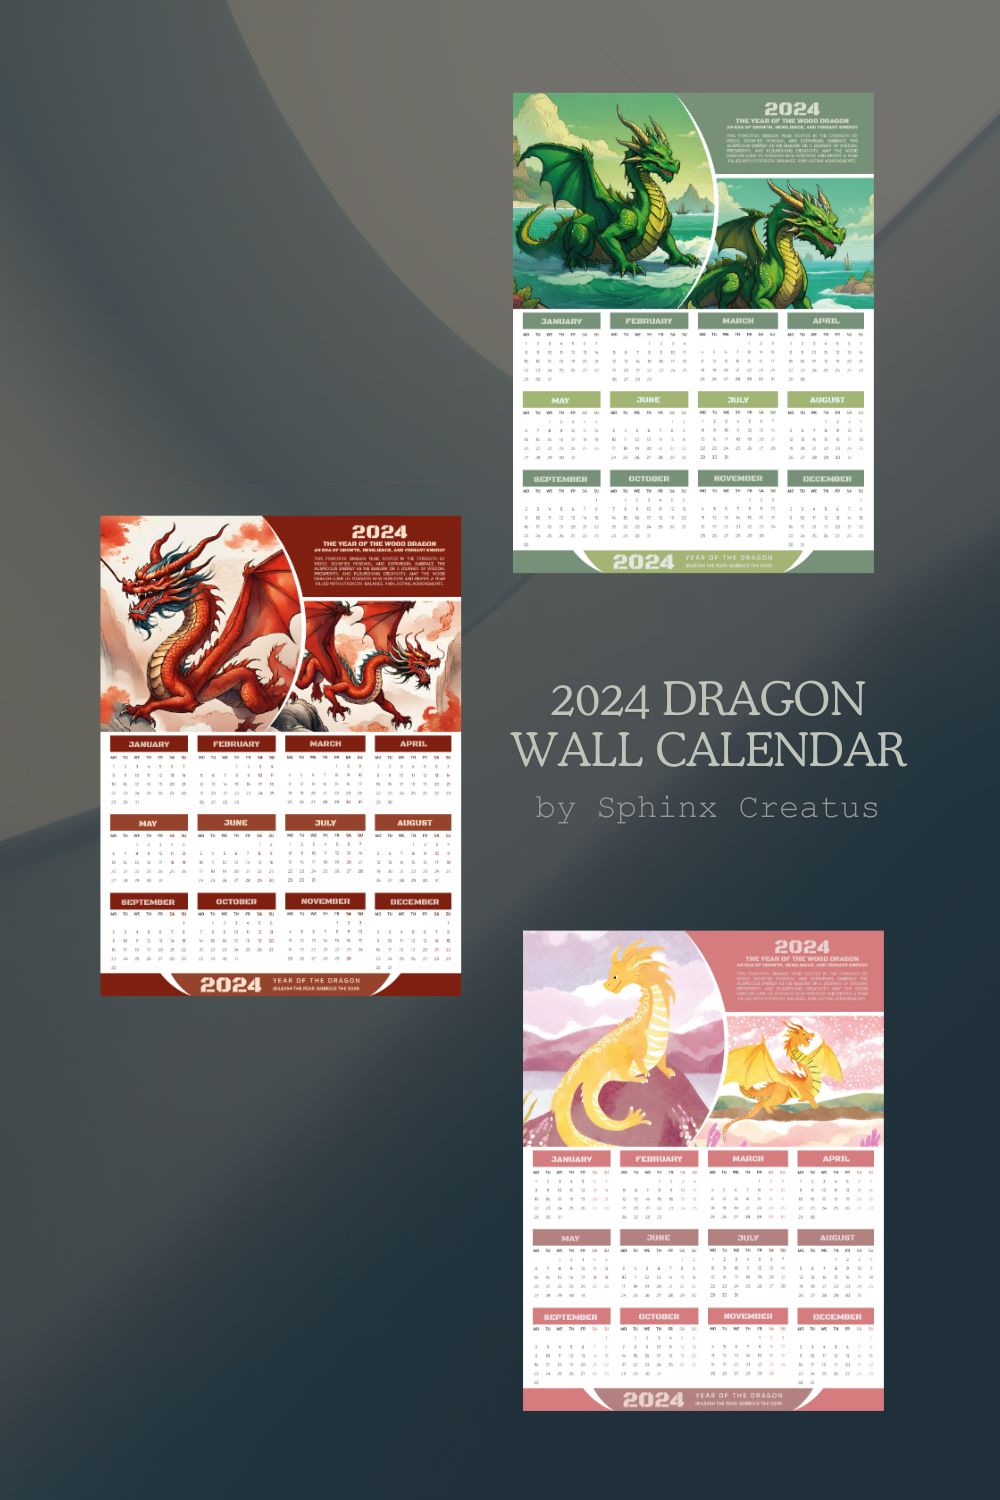 2024 Dragon Wall Calendar [Sphinx Creatus] pinterest preview image.